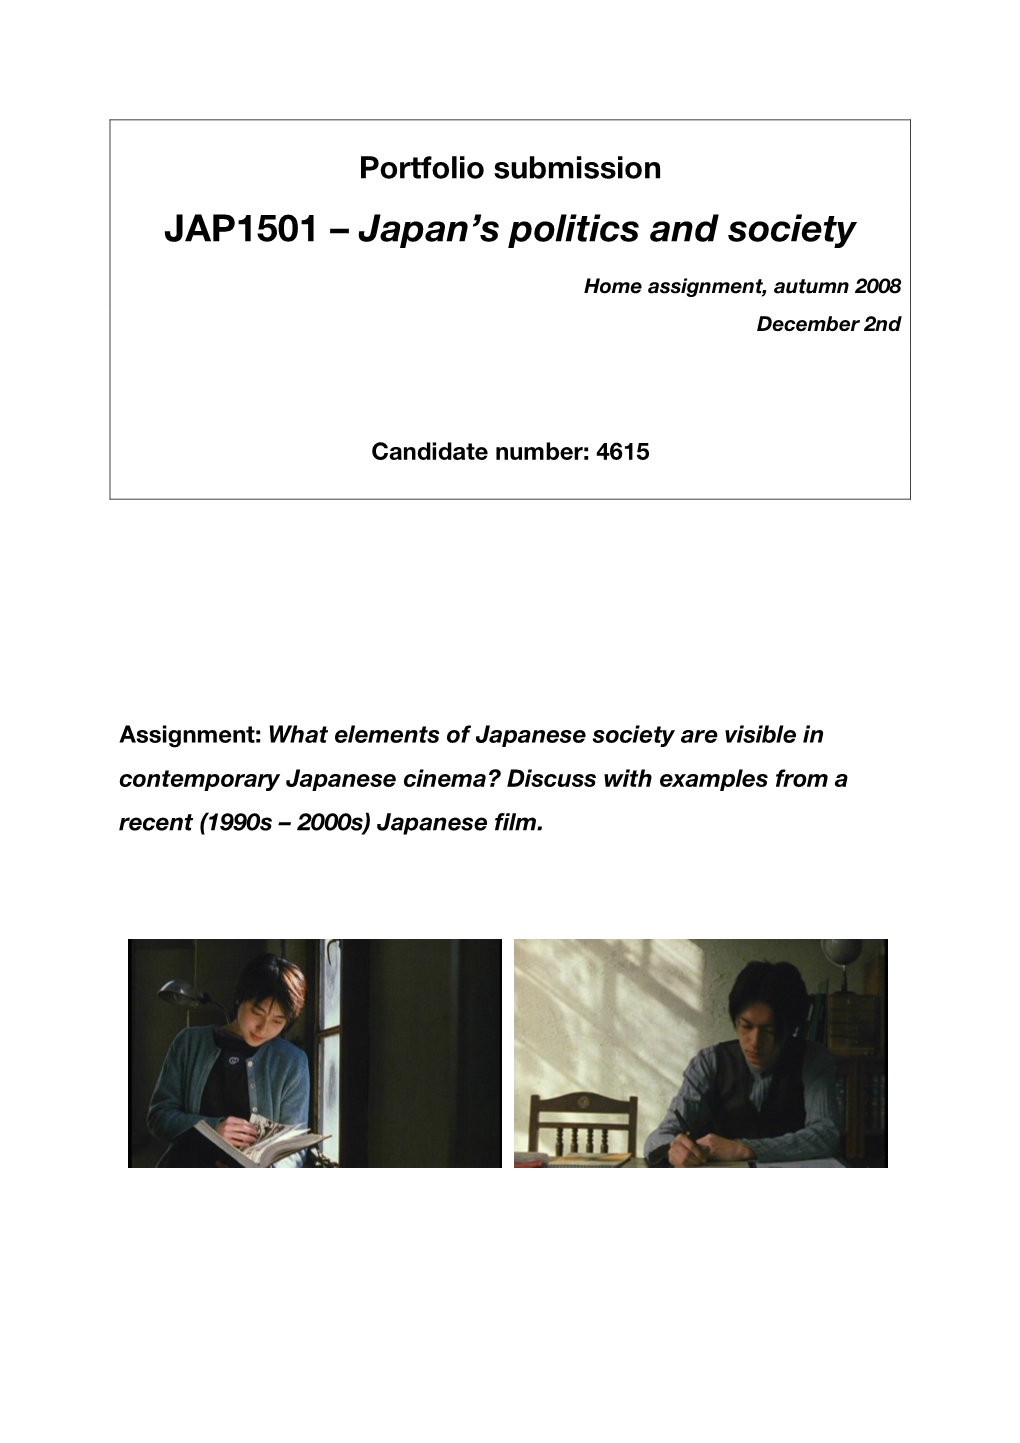 Portfolio Submission JAP1501 – Japan’S Politics and Society